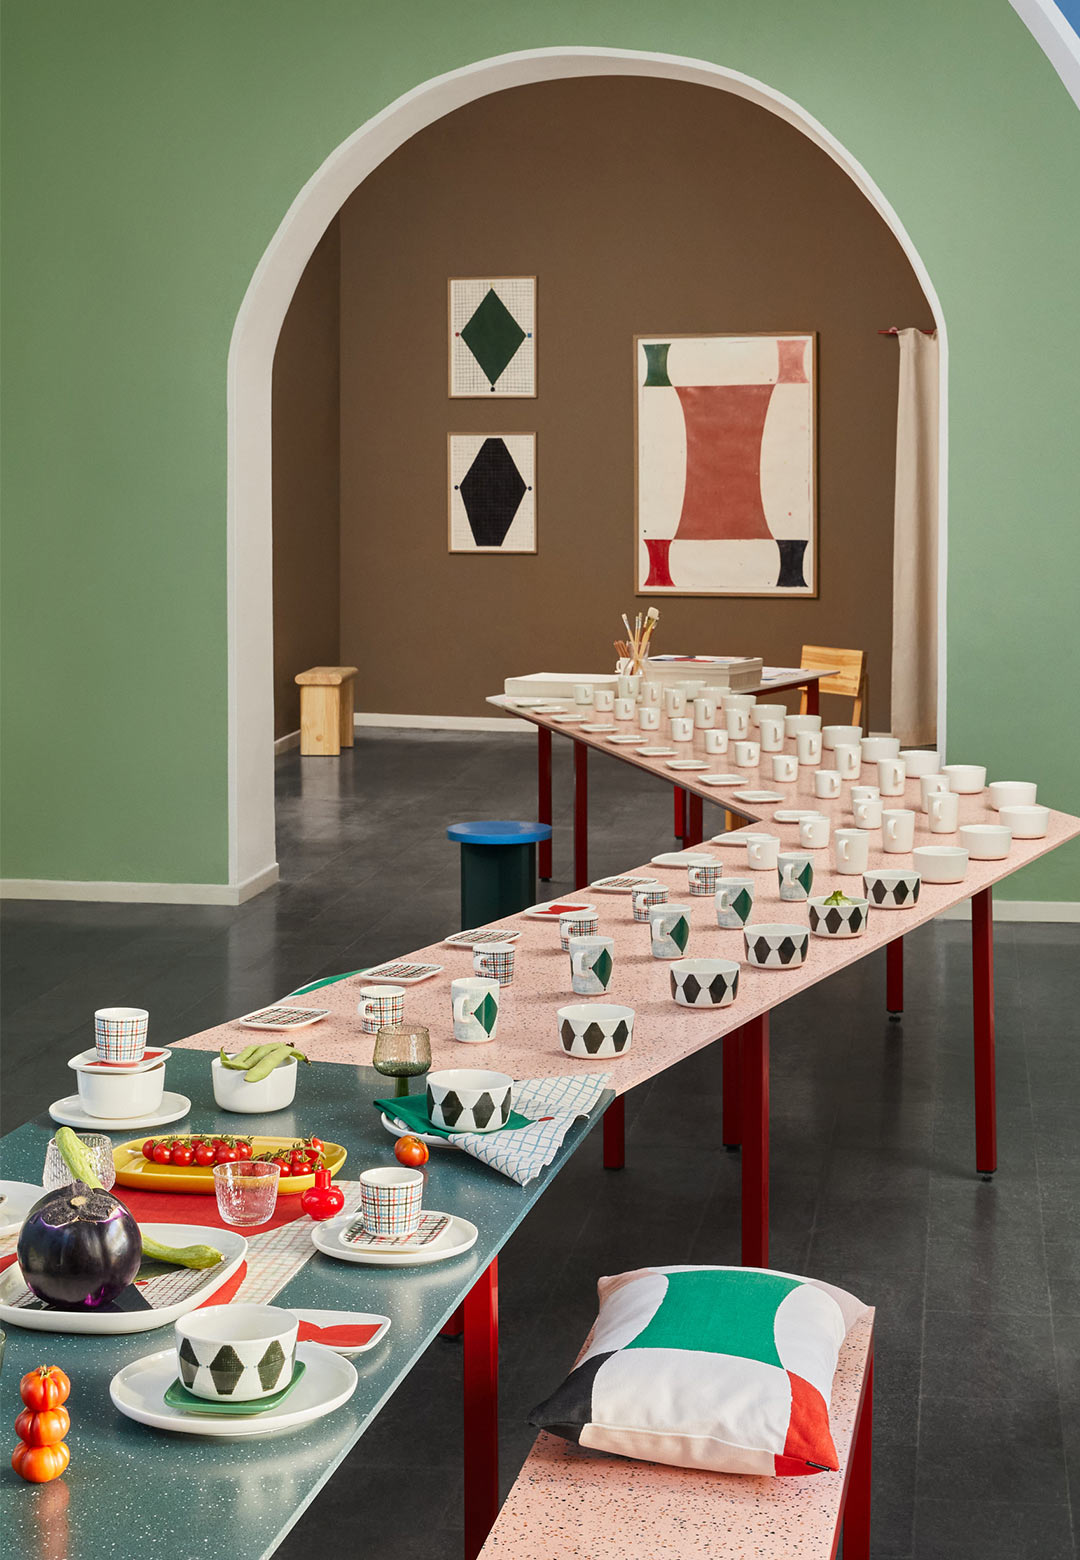 Where Art meets Home: Marimekko x Sabine Finkenauer’s artful collaboration